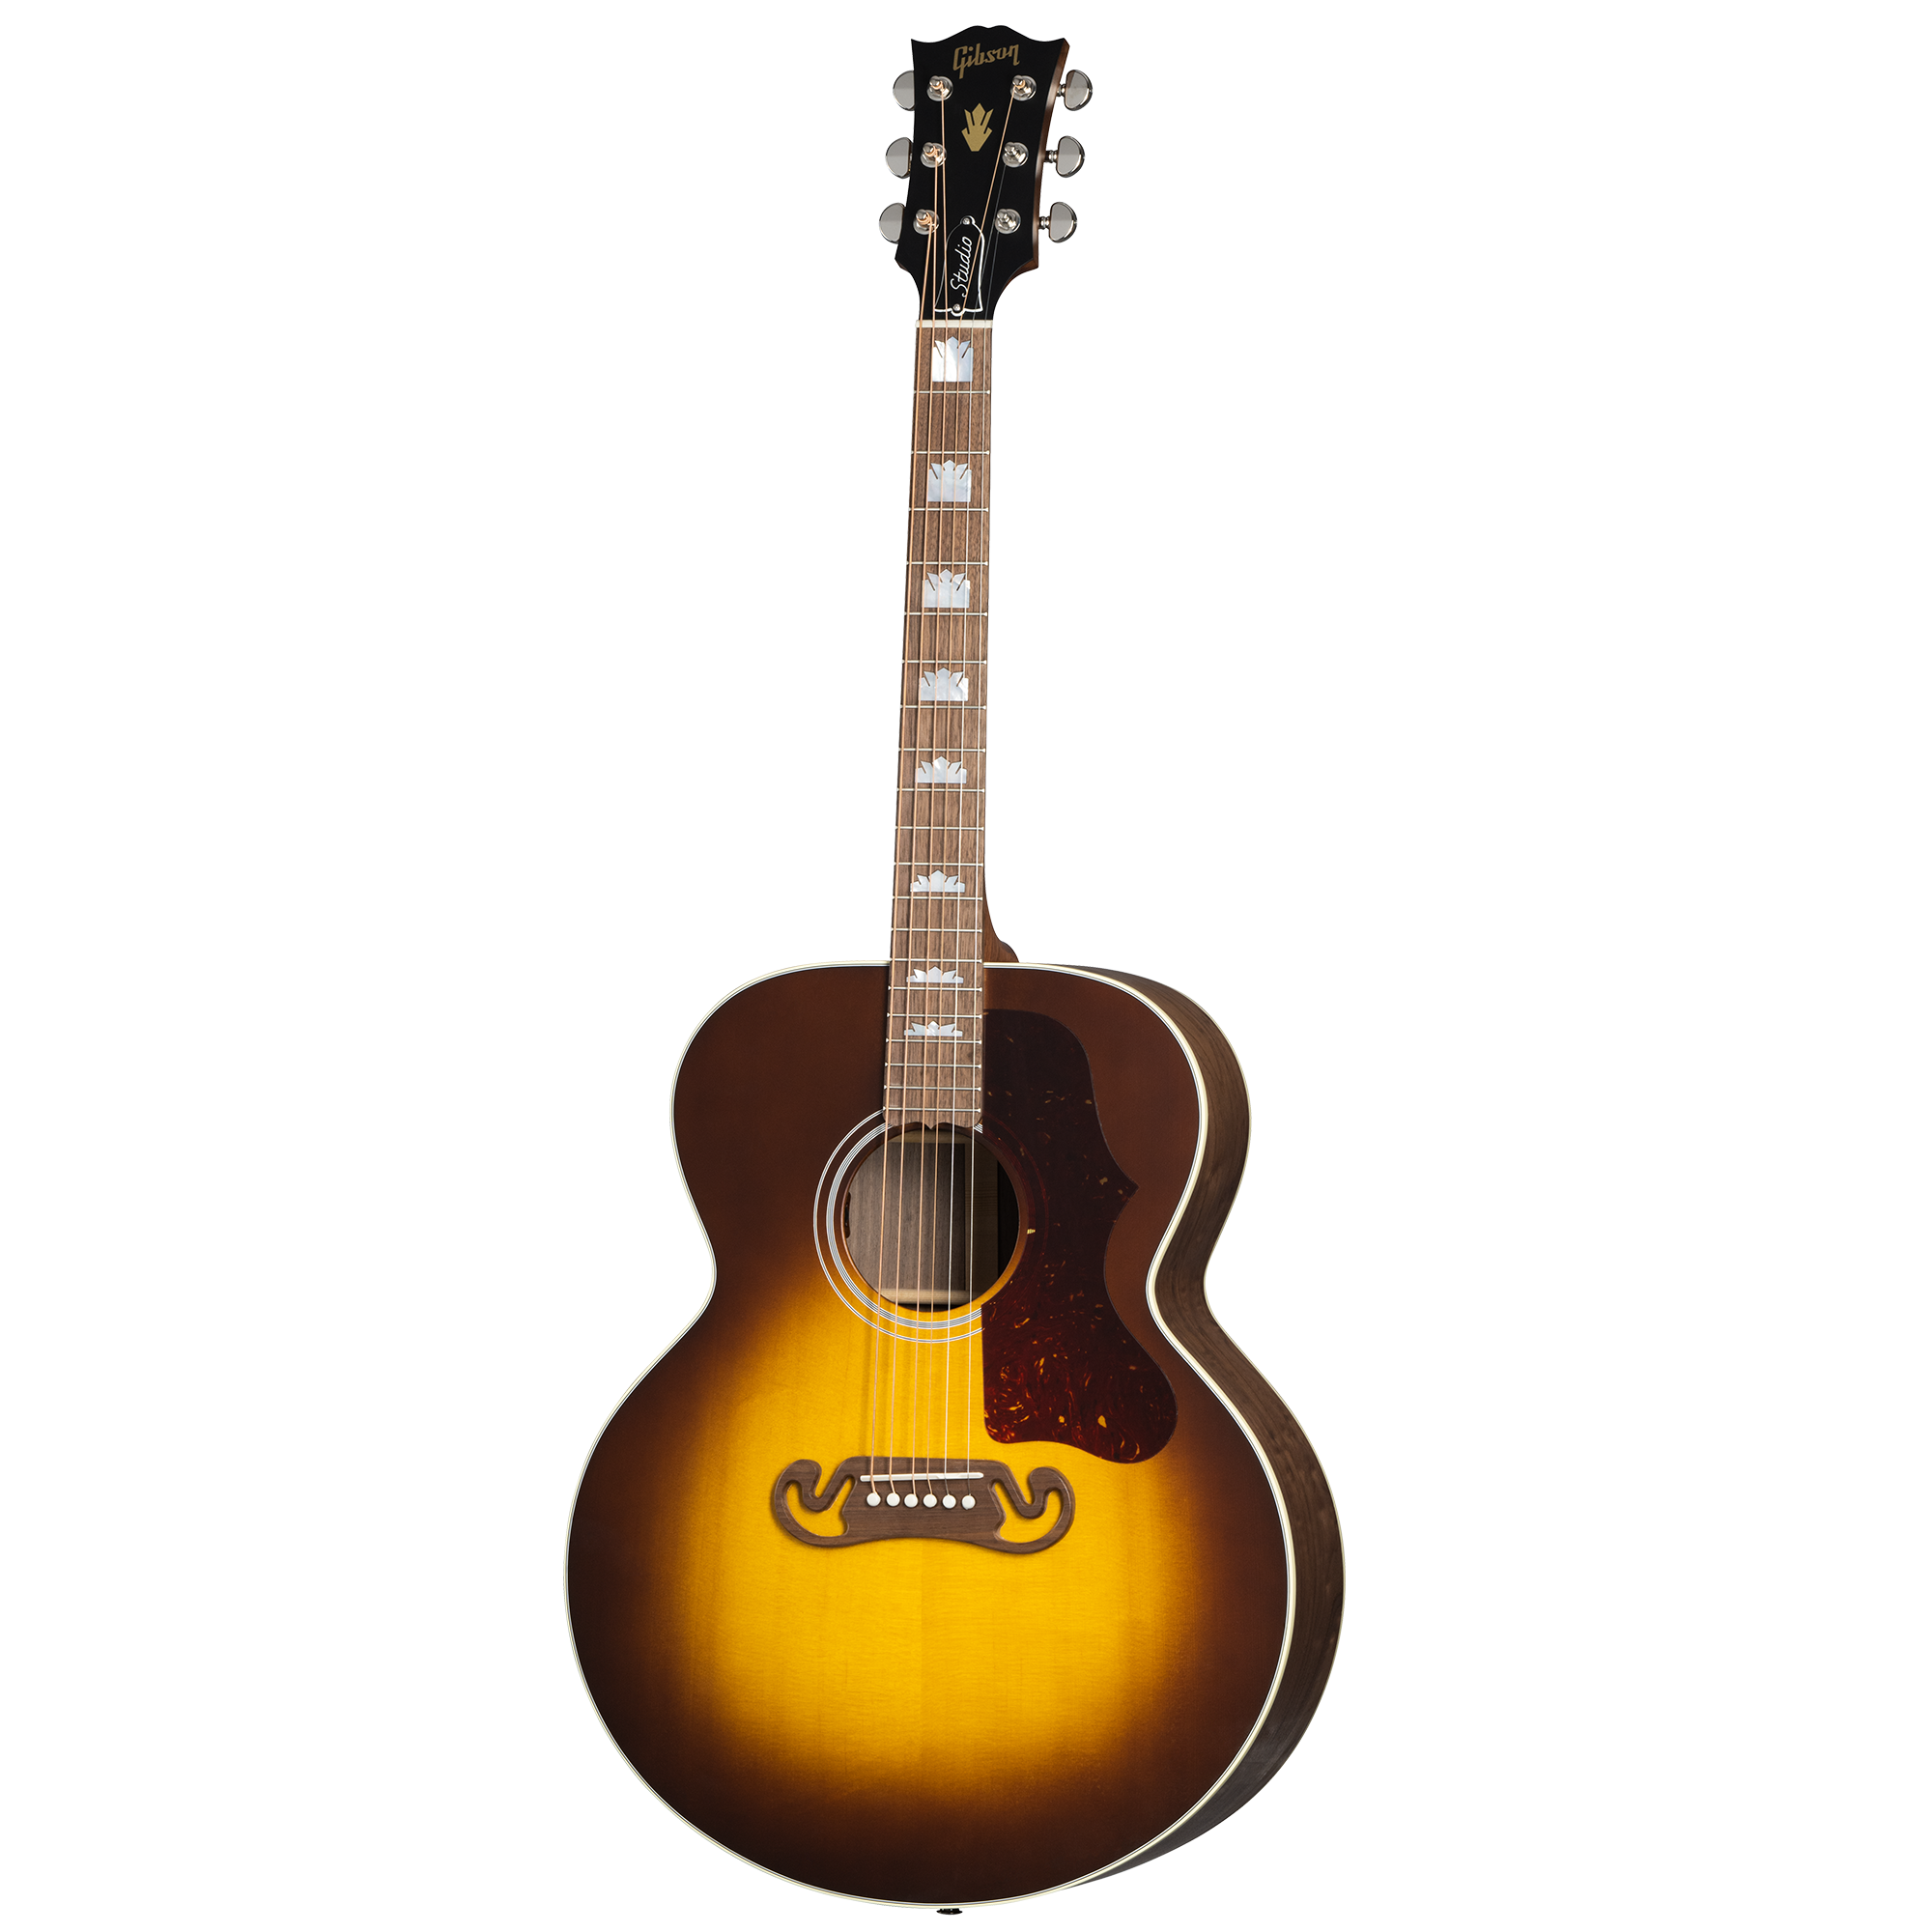 Gibson Sj-200 Studio Walnut Acoustic-electric Guitar - Satin Walnut Burst (Sj200)